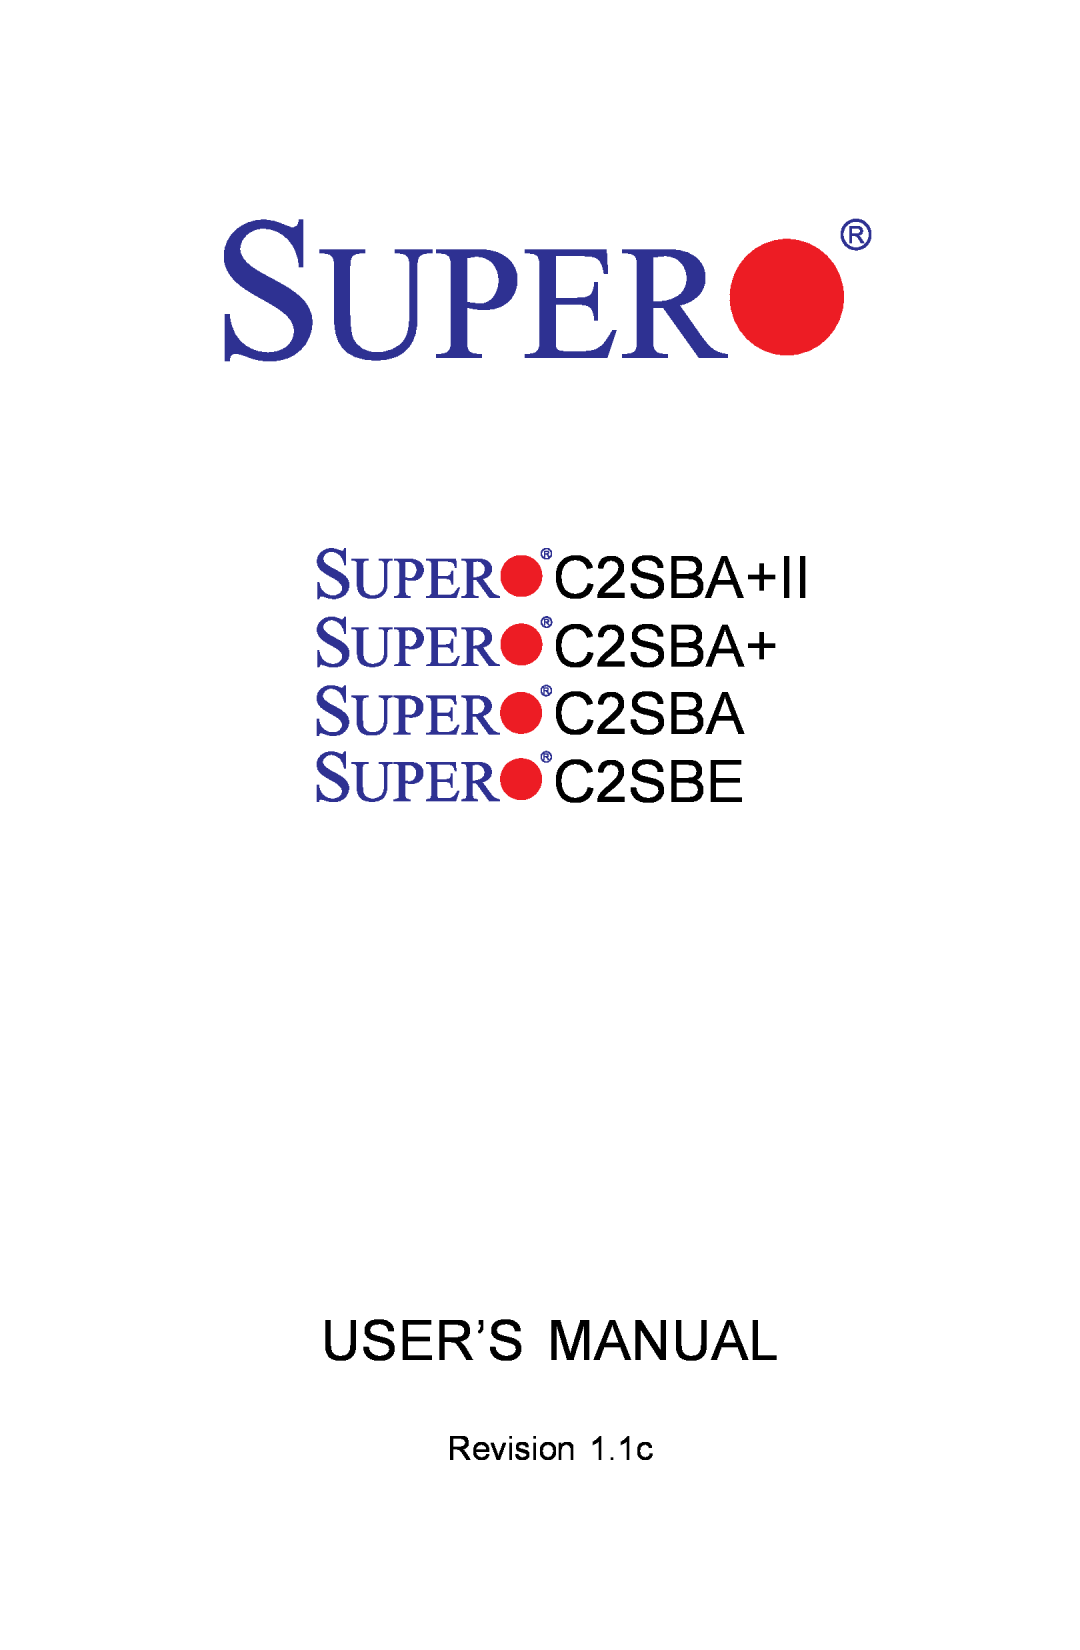 SUPER MICRO Computer user manual Revision 1.1c, C2SBA+II C2SBA+ C2SBA C2SBE, User’S Manual 